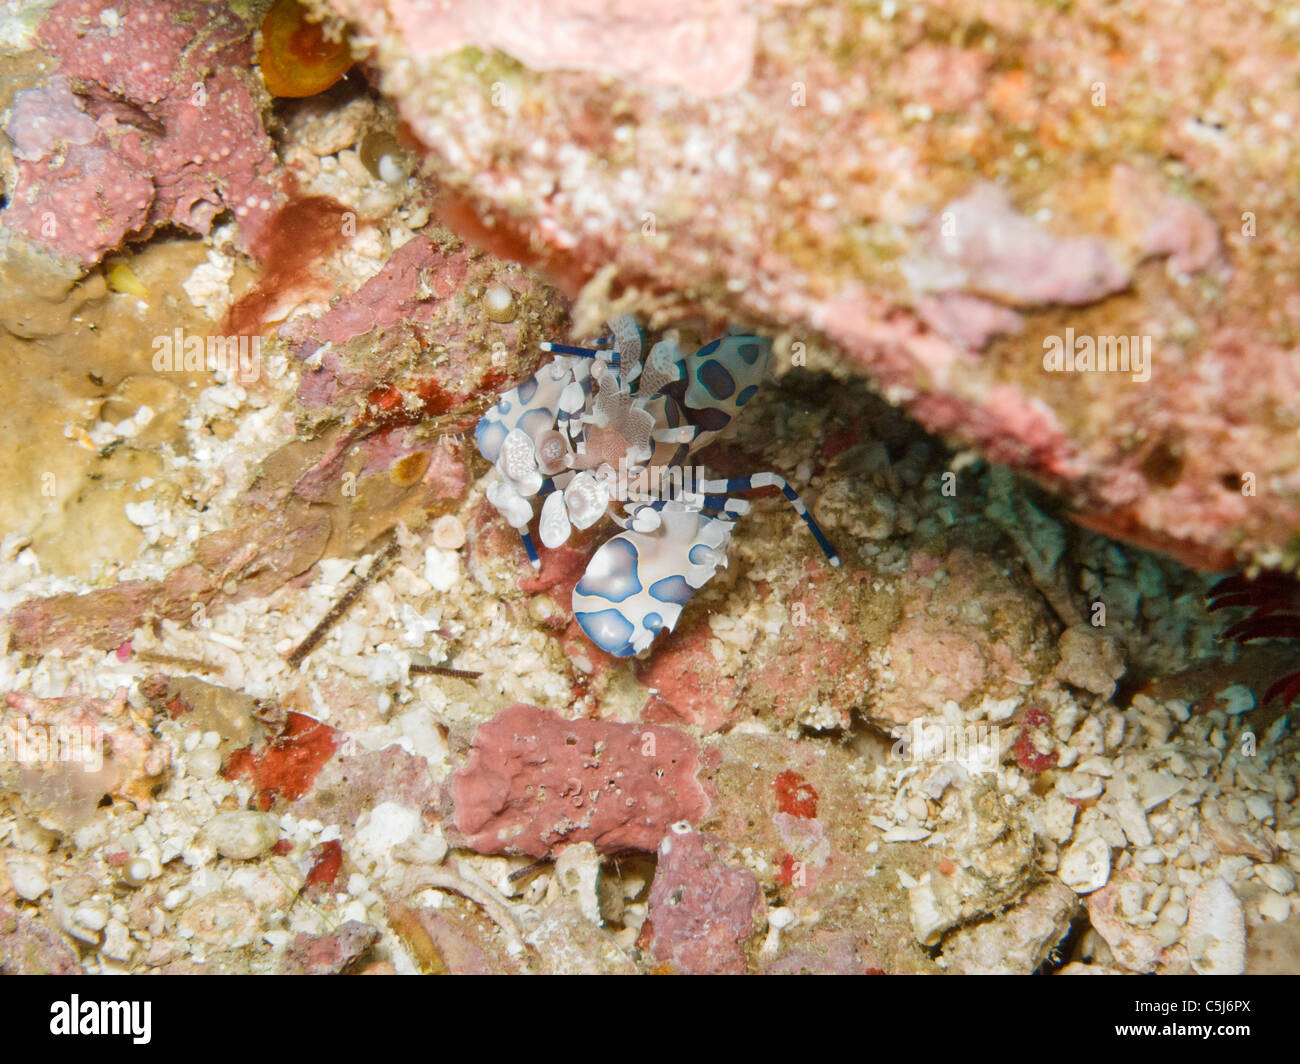 Harlequin Shrimp hiding under crevice Stock Photo